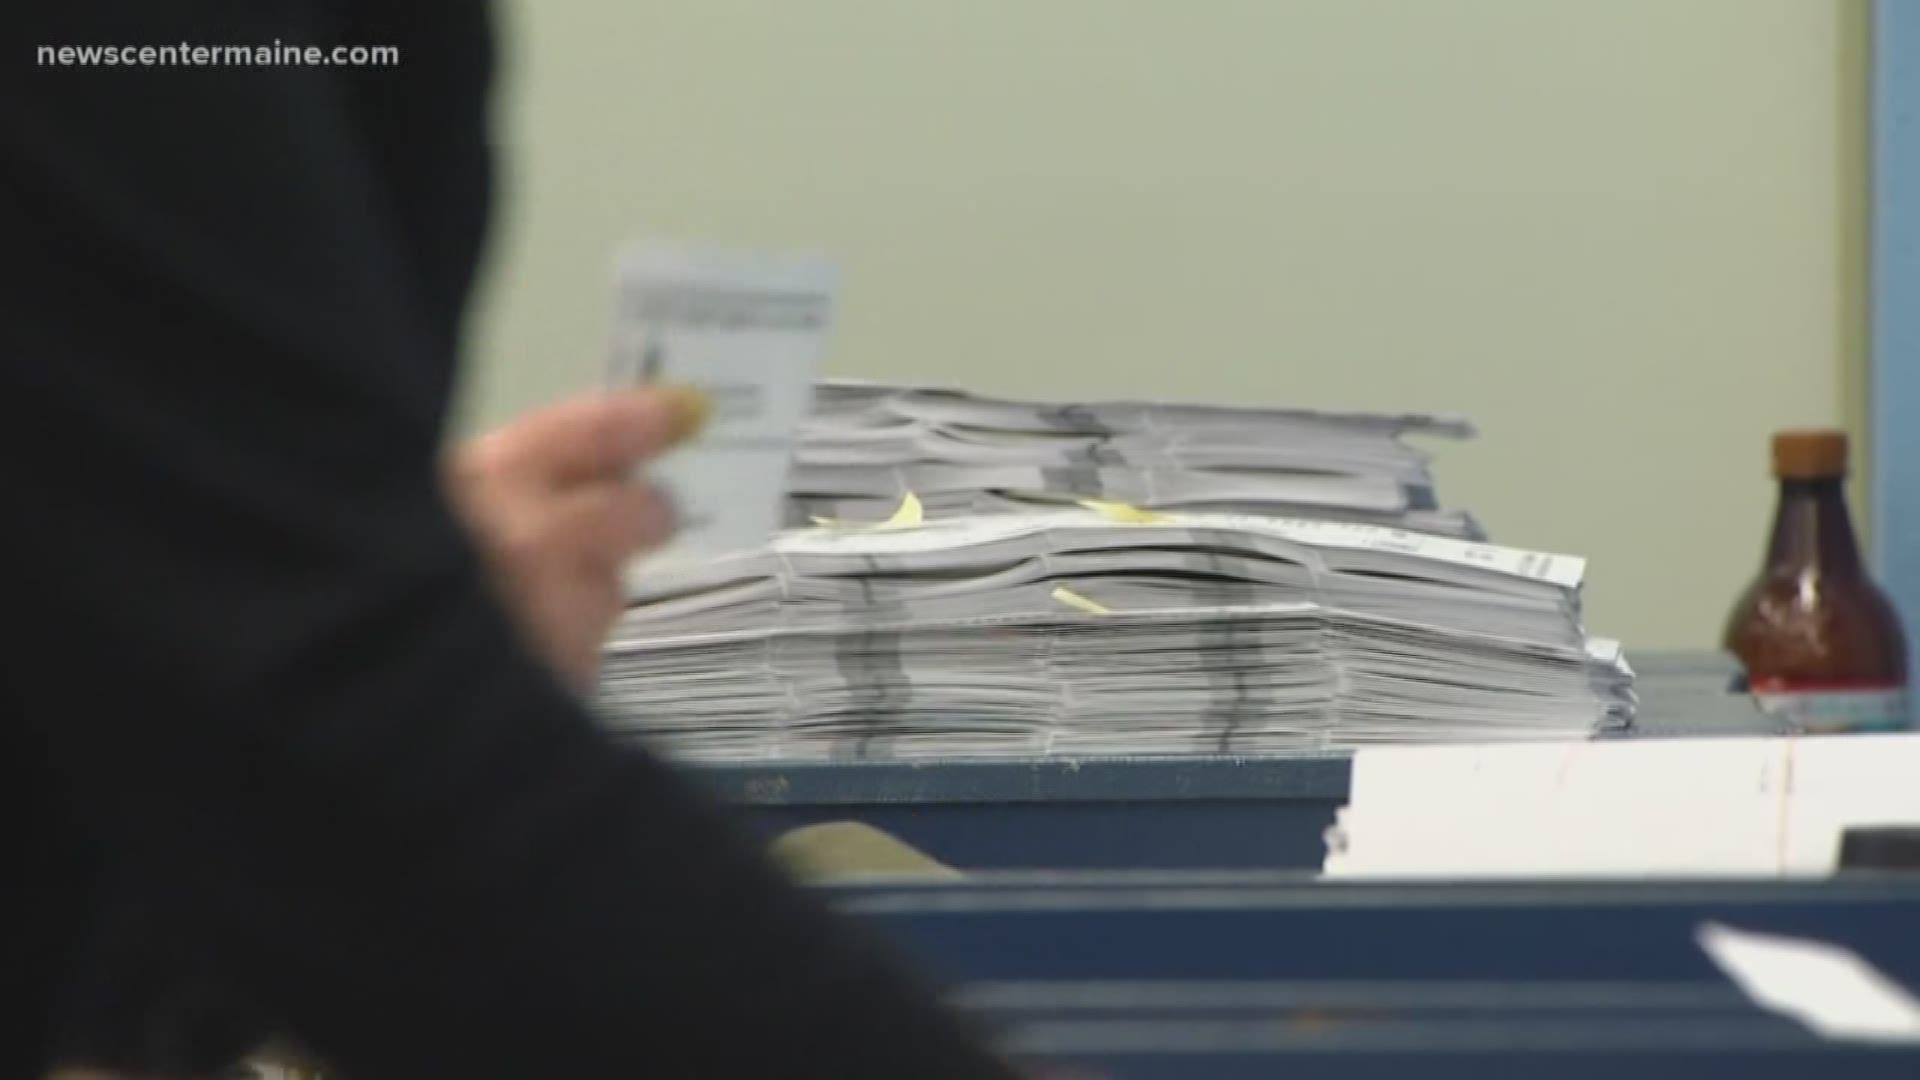 Maine GOP raises concerns over RCV ballot tabulation process